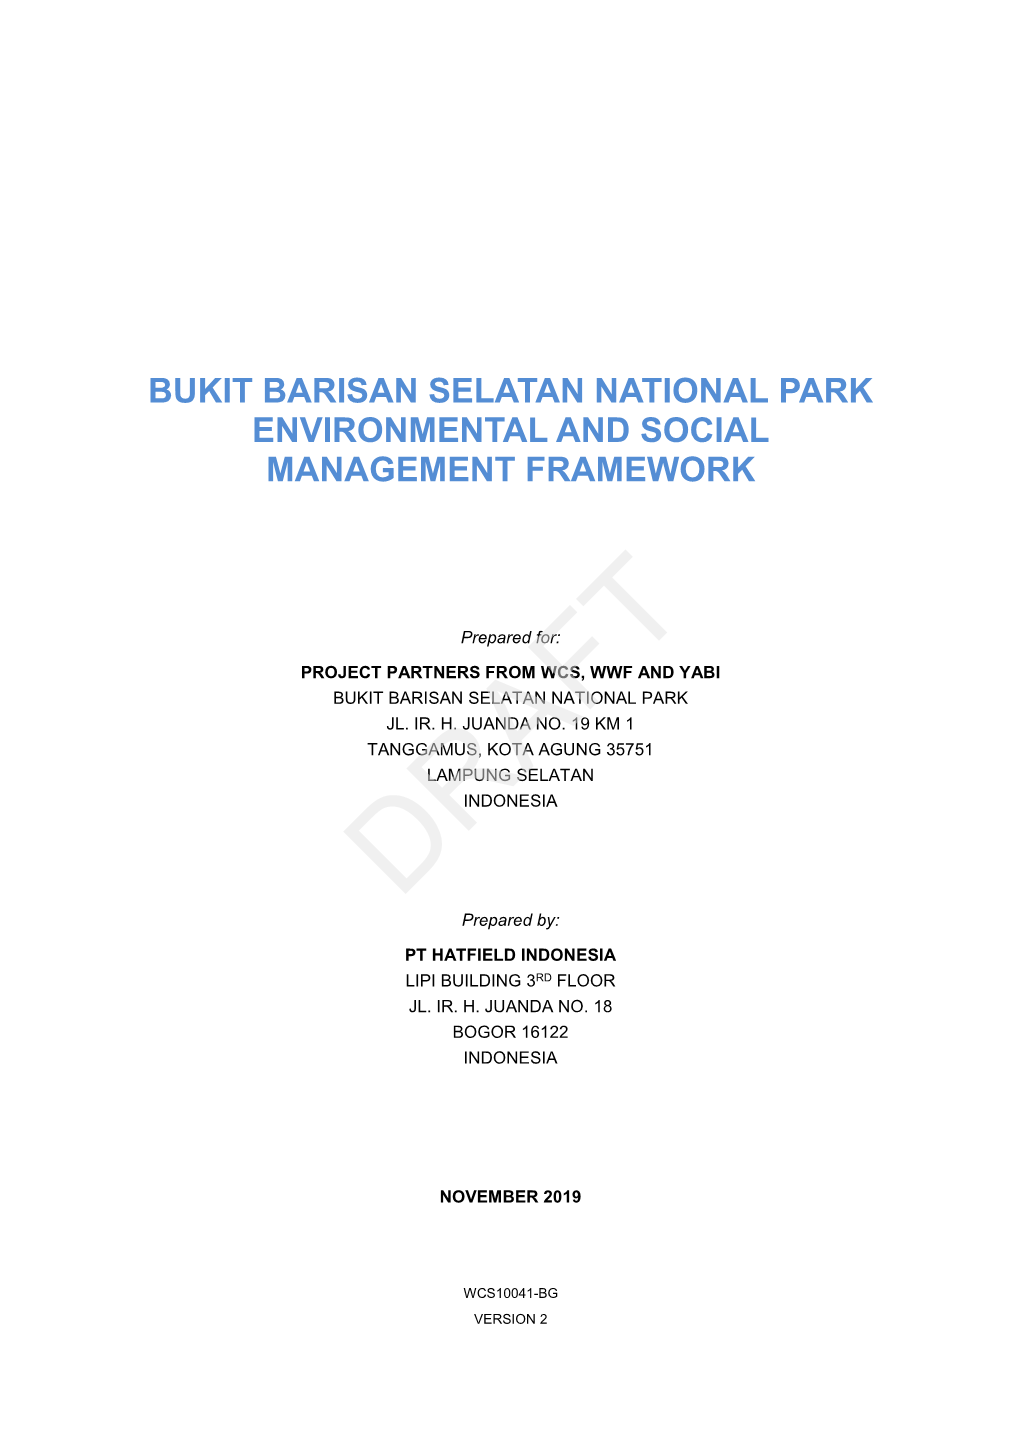 Bukit Barisan Selatan National Park Environmental and Social Management Framework